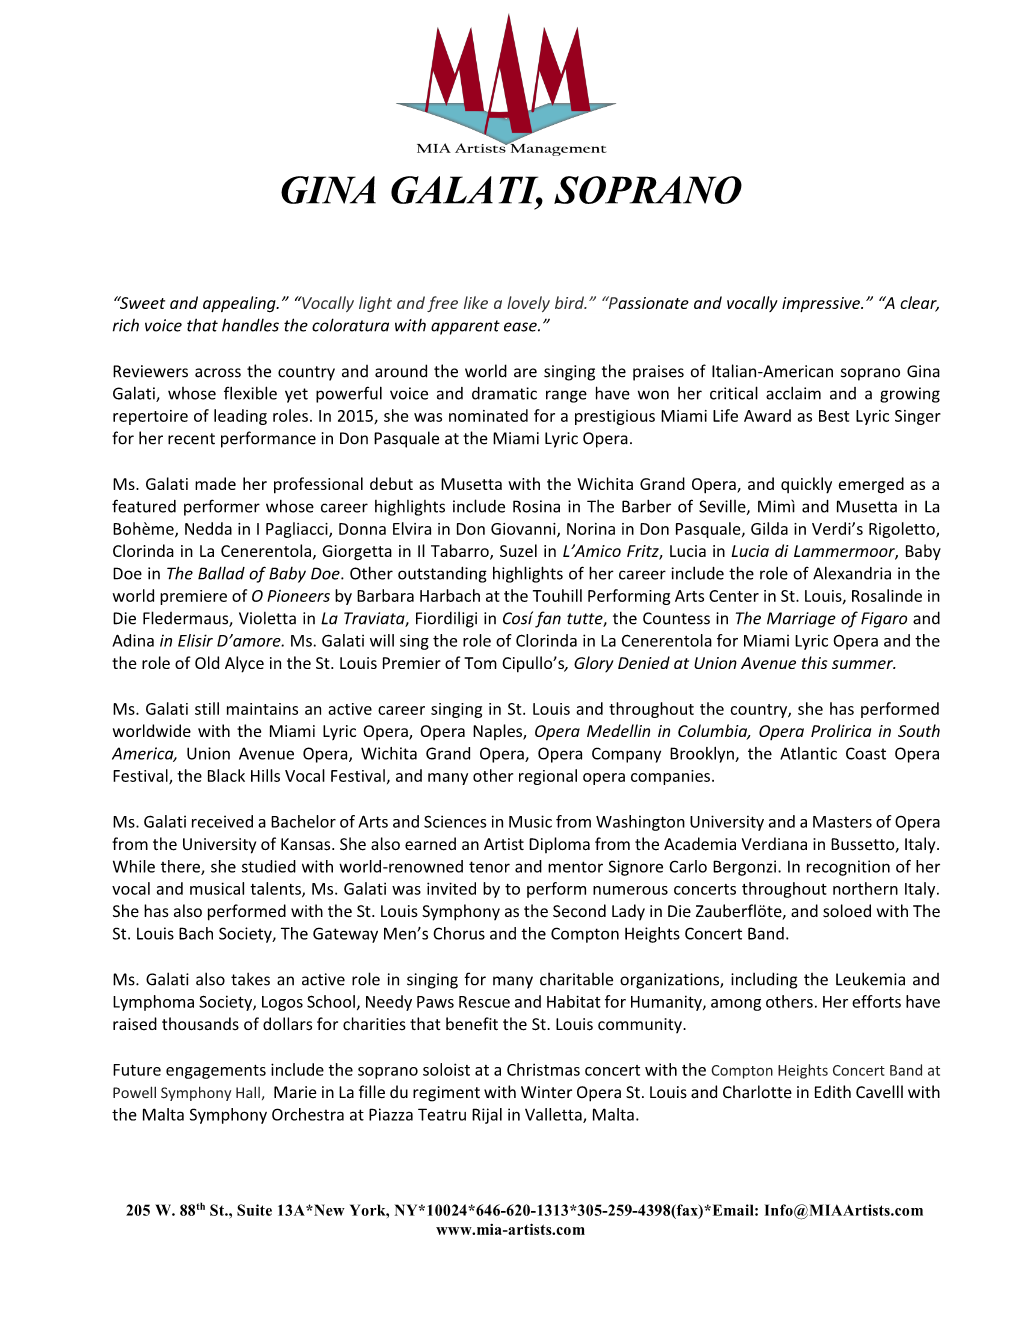 Gina Galati, Soprano